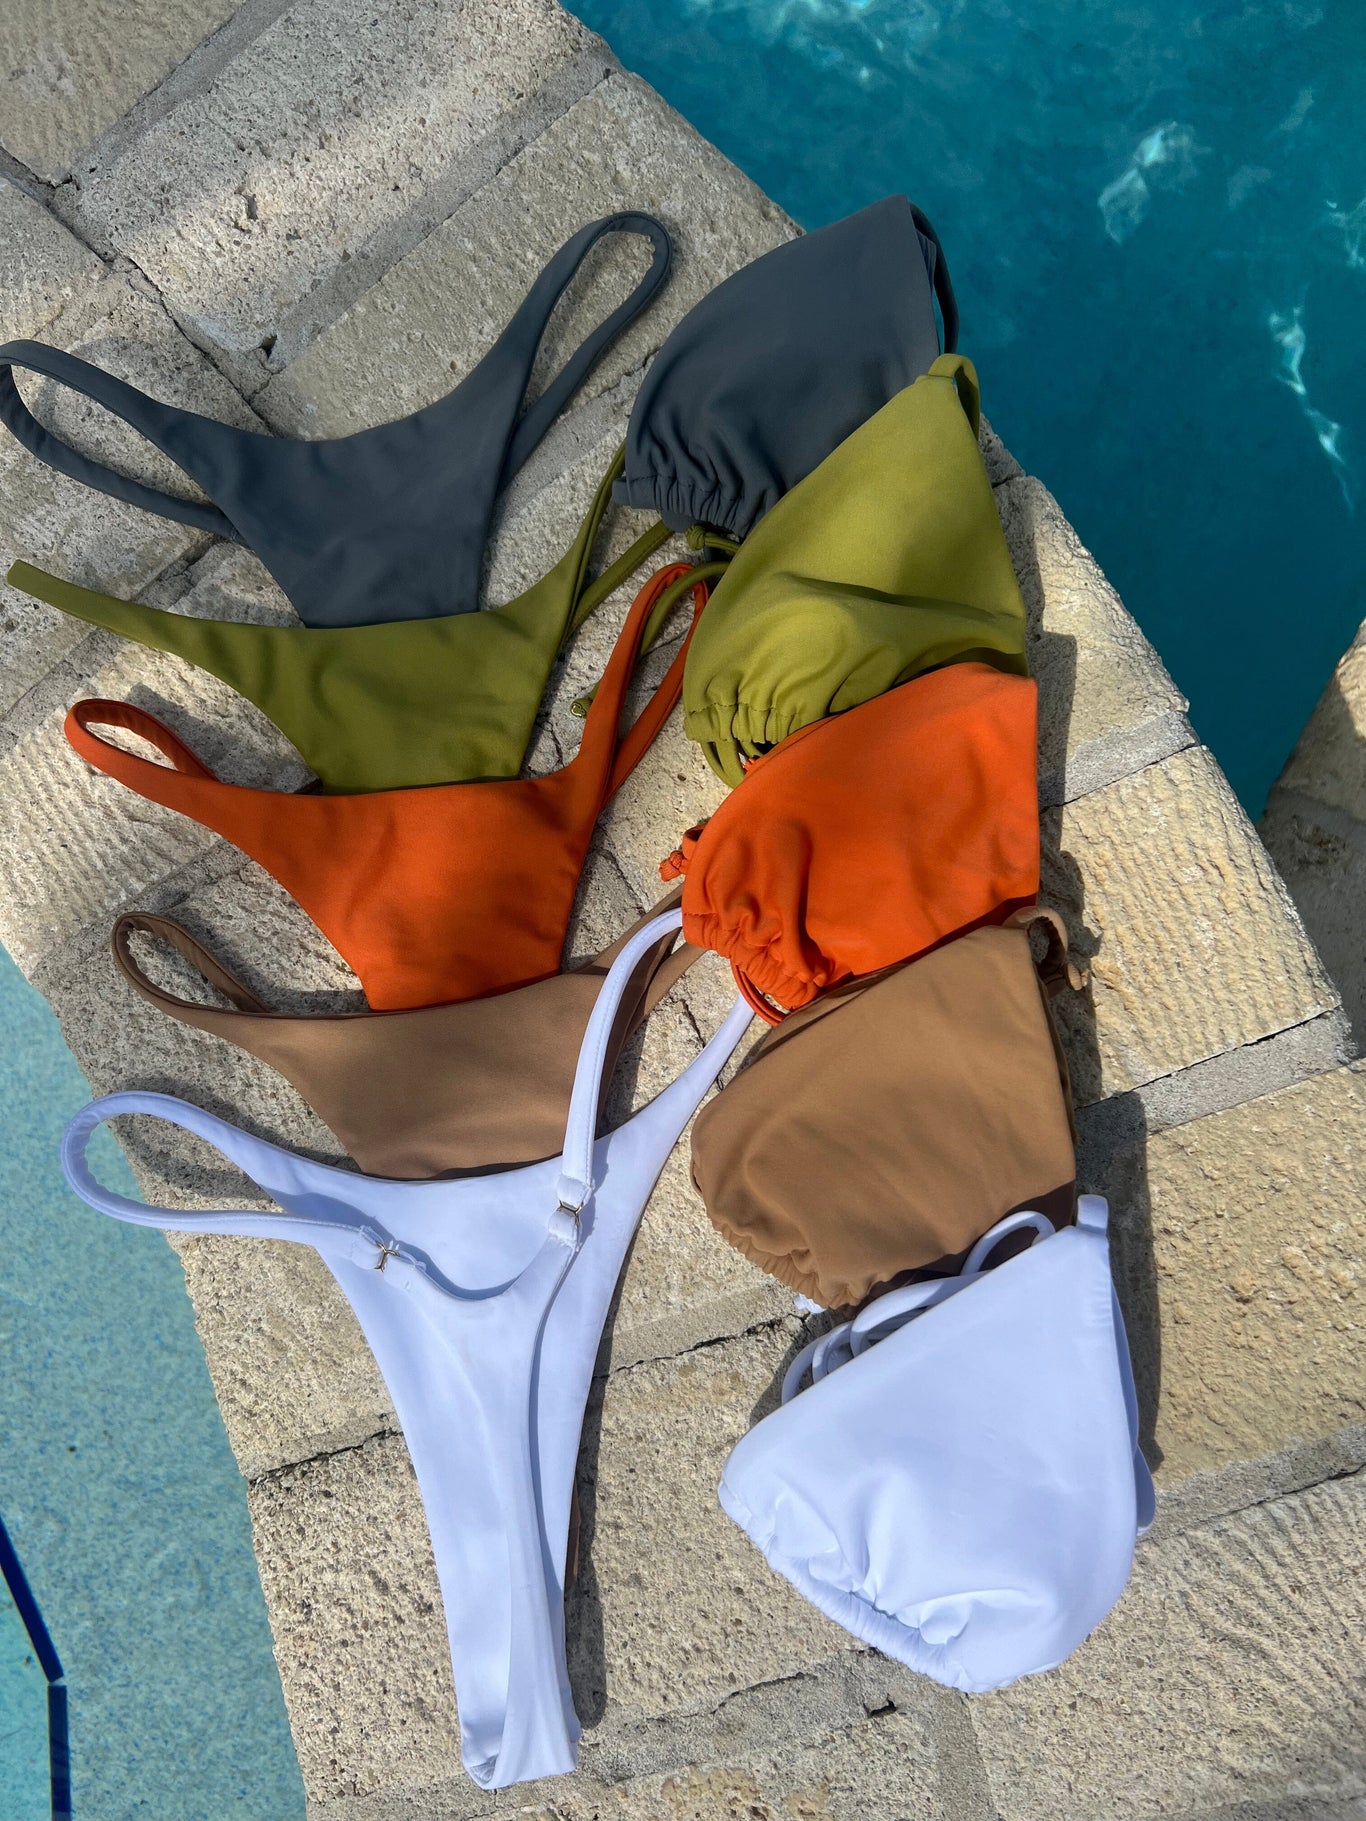 SEAMLESS TRIANGLE TOP- GINGER - Berry Beachy Swimwear